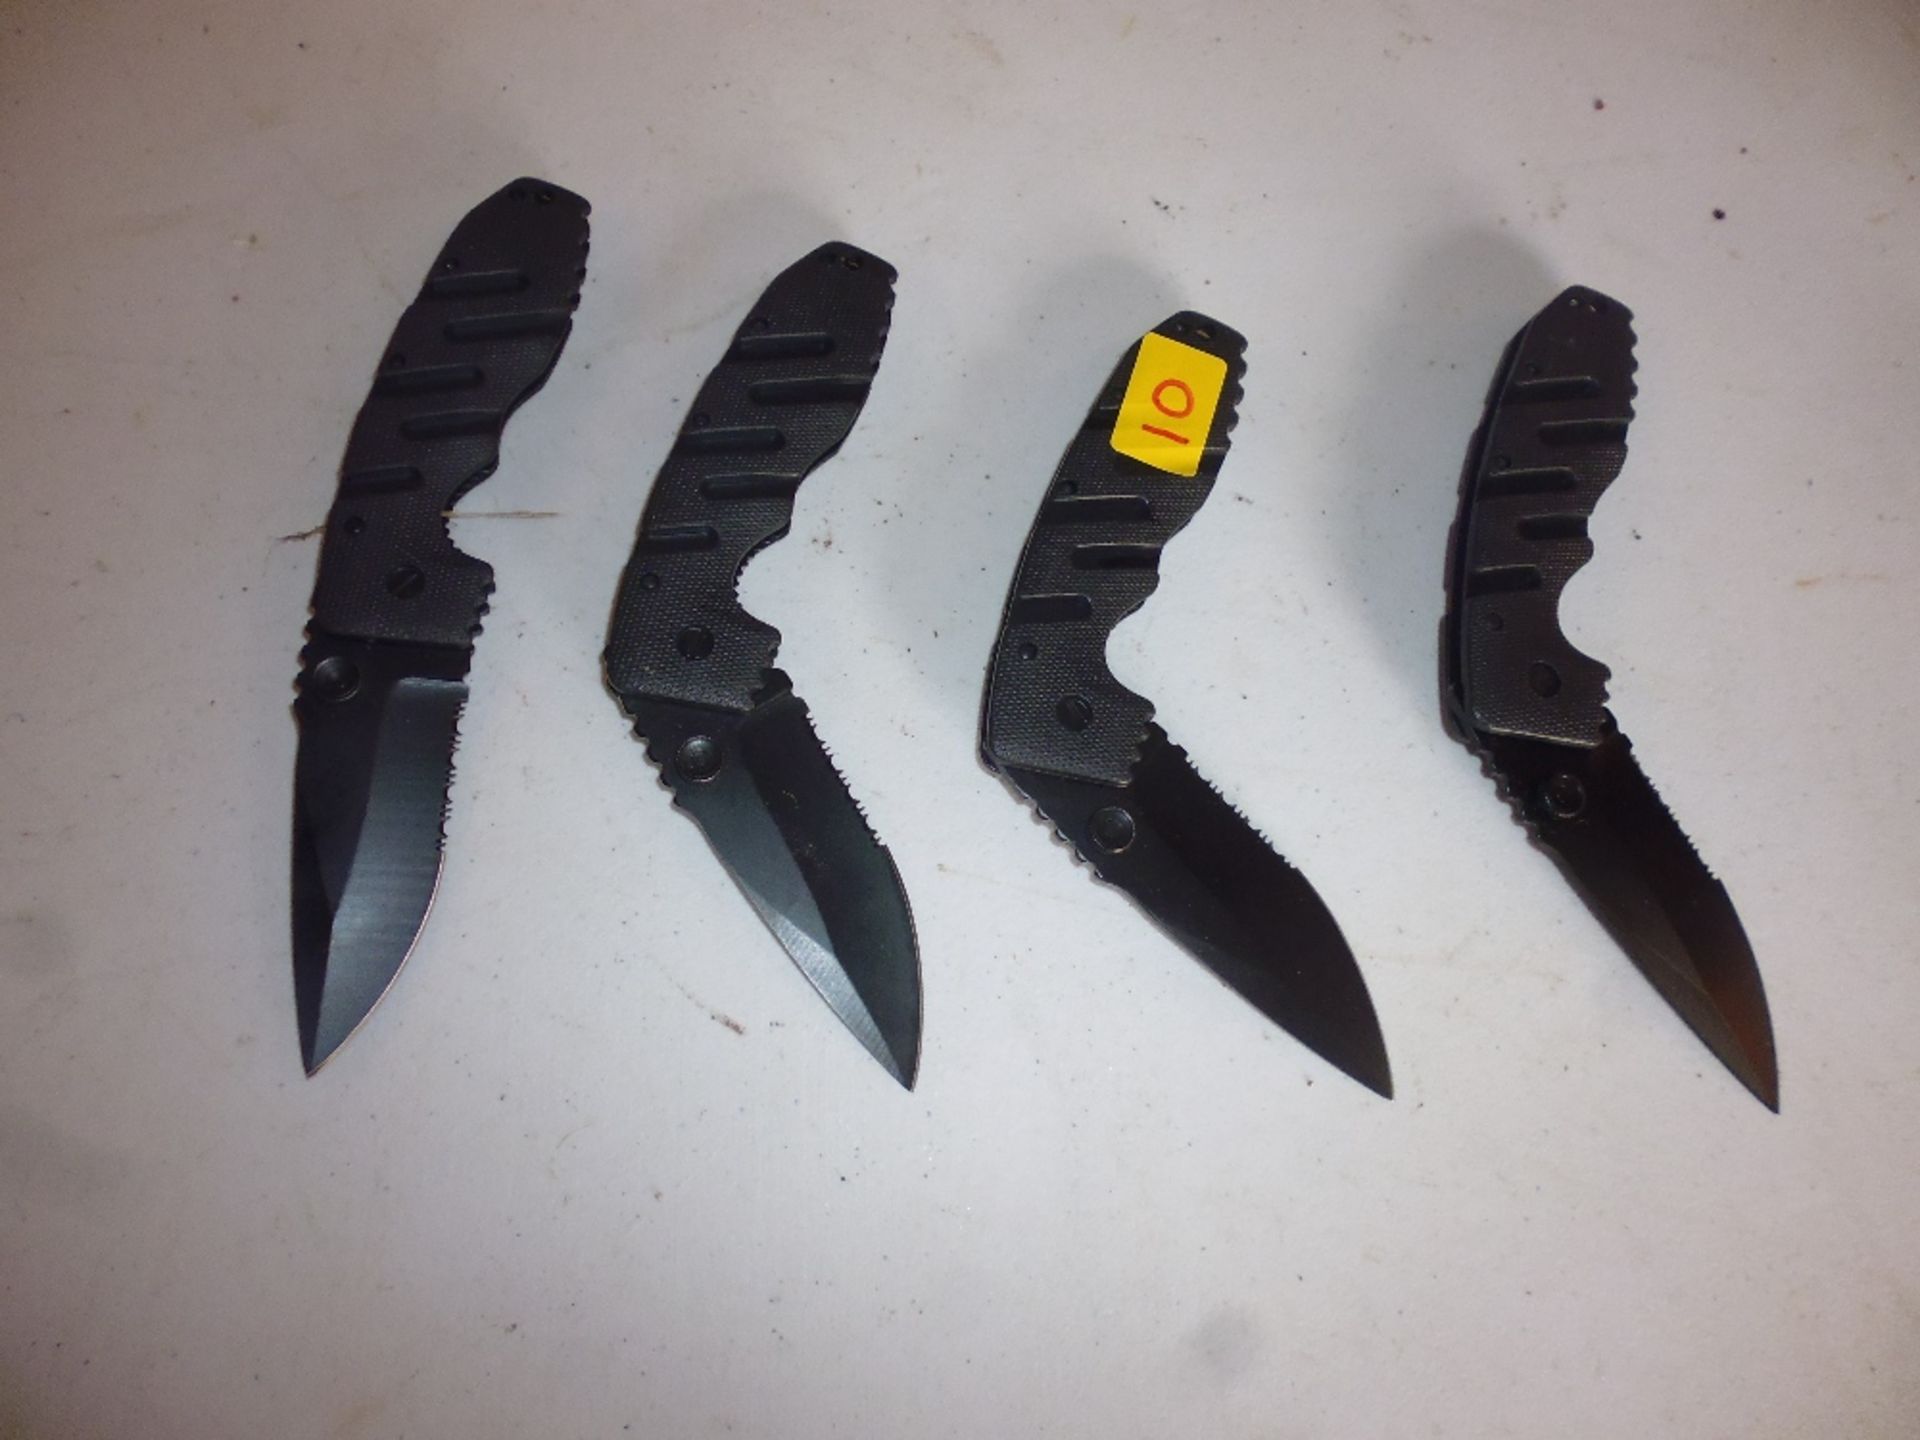 4 British army folding knives.